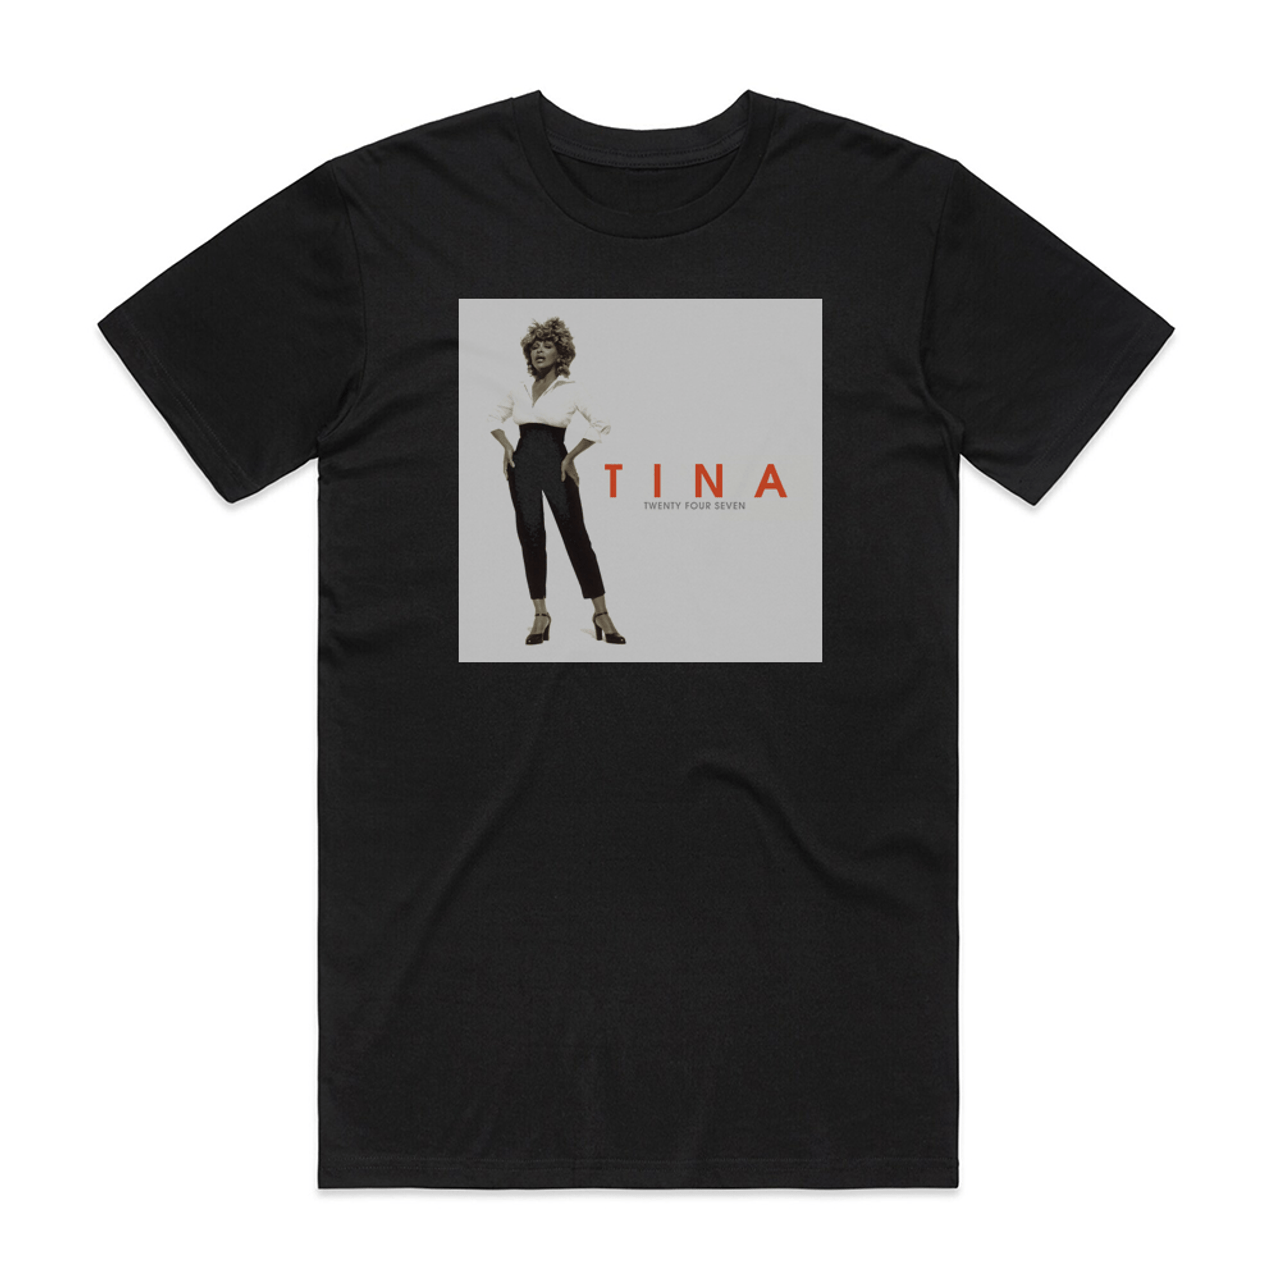 Tina Turner Twenty Four Seven 1 Album Cover T-Shirt Black